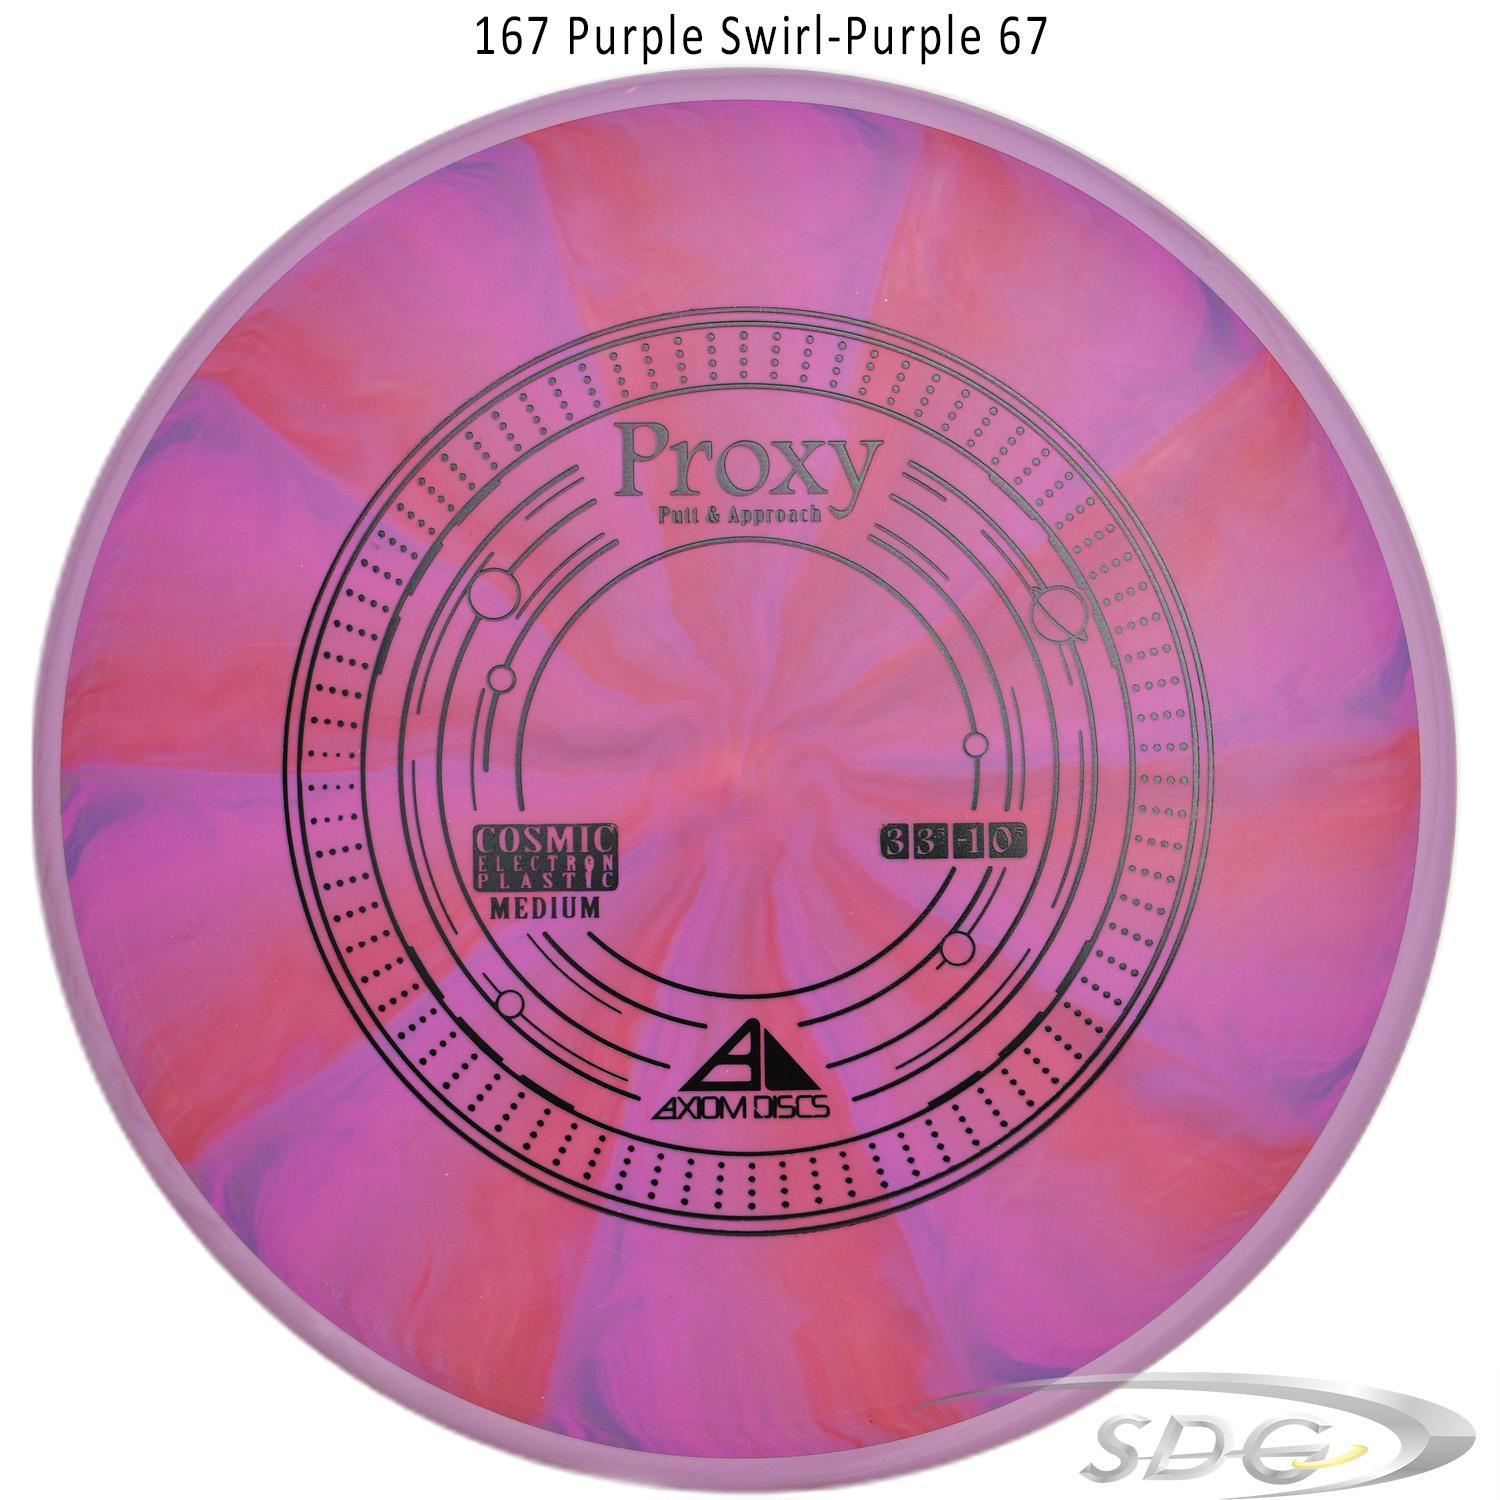 axiom-cosmic-electron-proxy-medium-disc-golf-putt-approach 167 Purple Swirl-Purple 67 